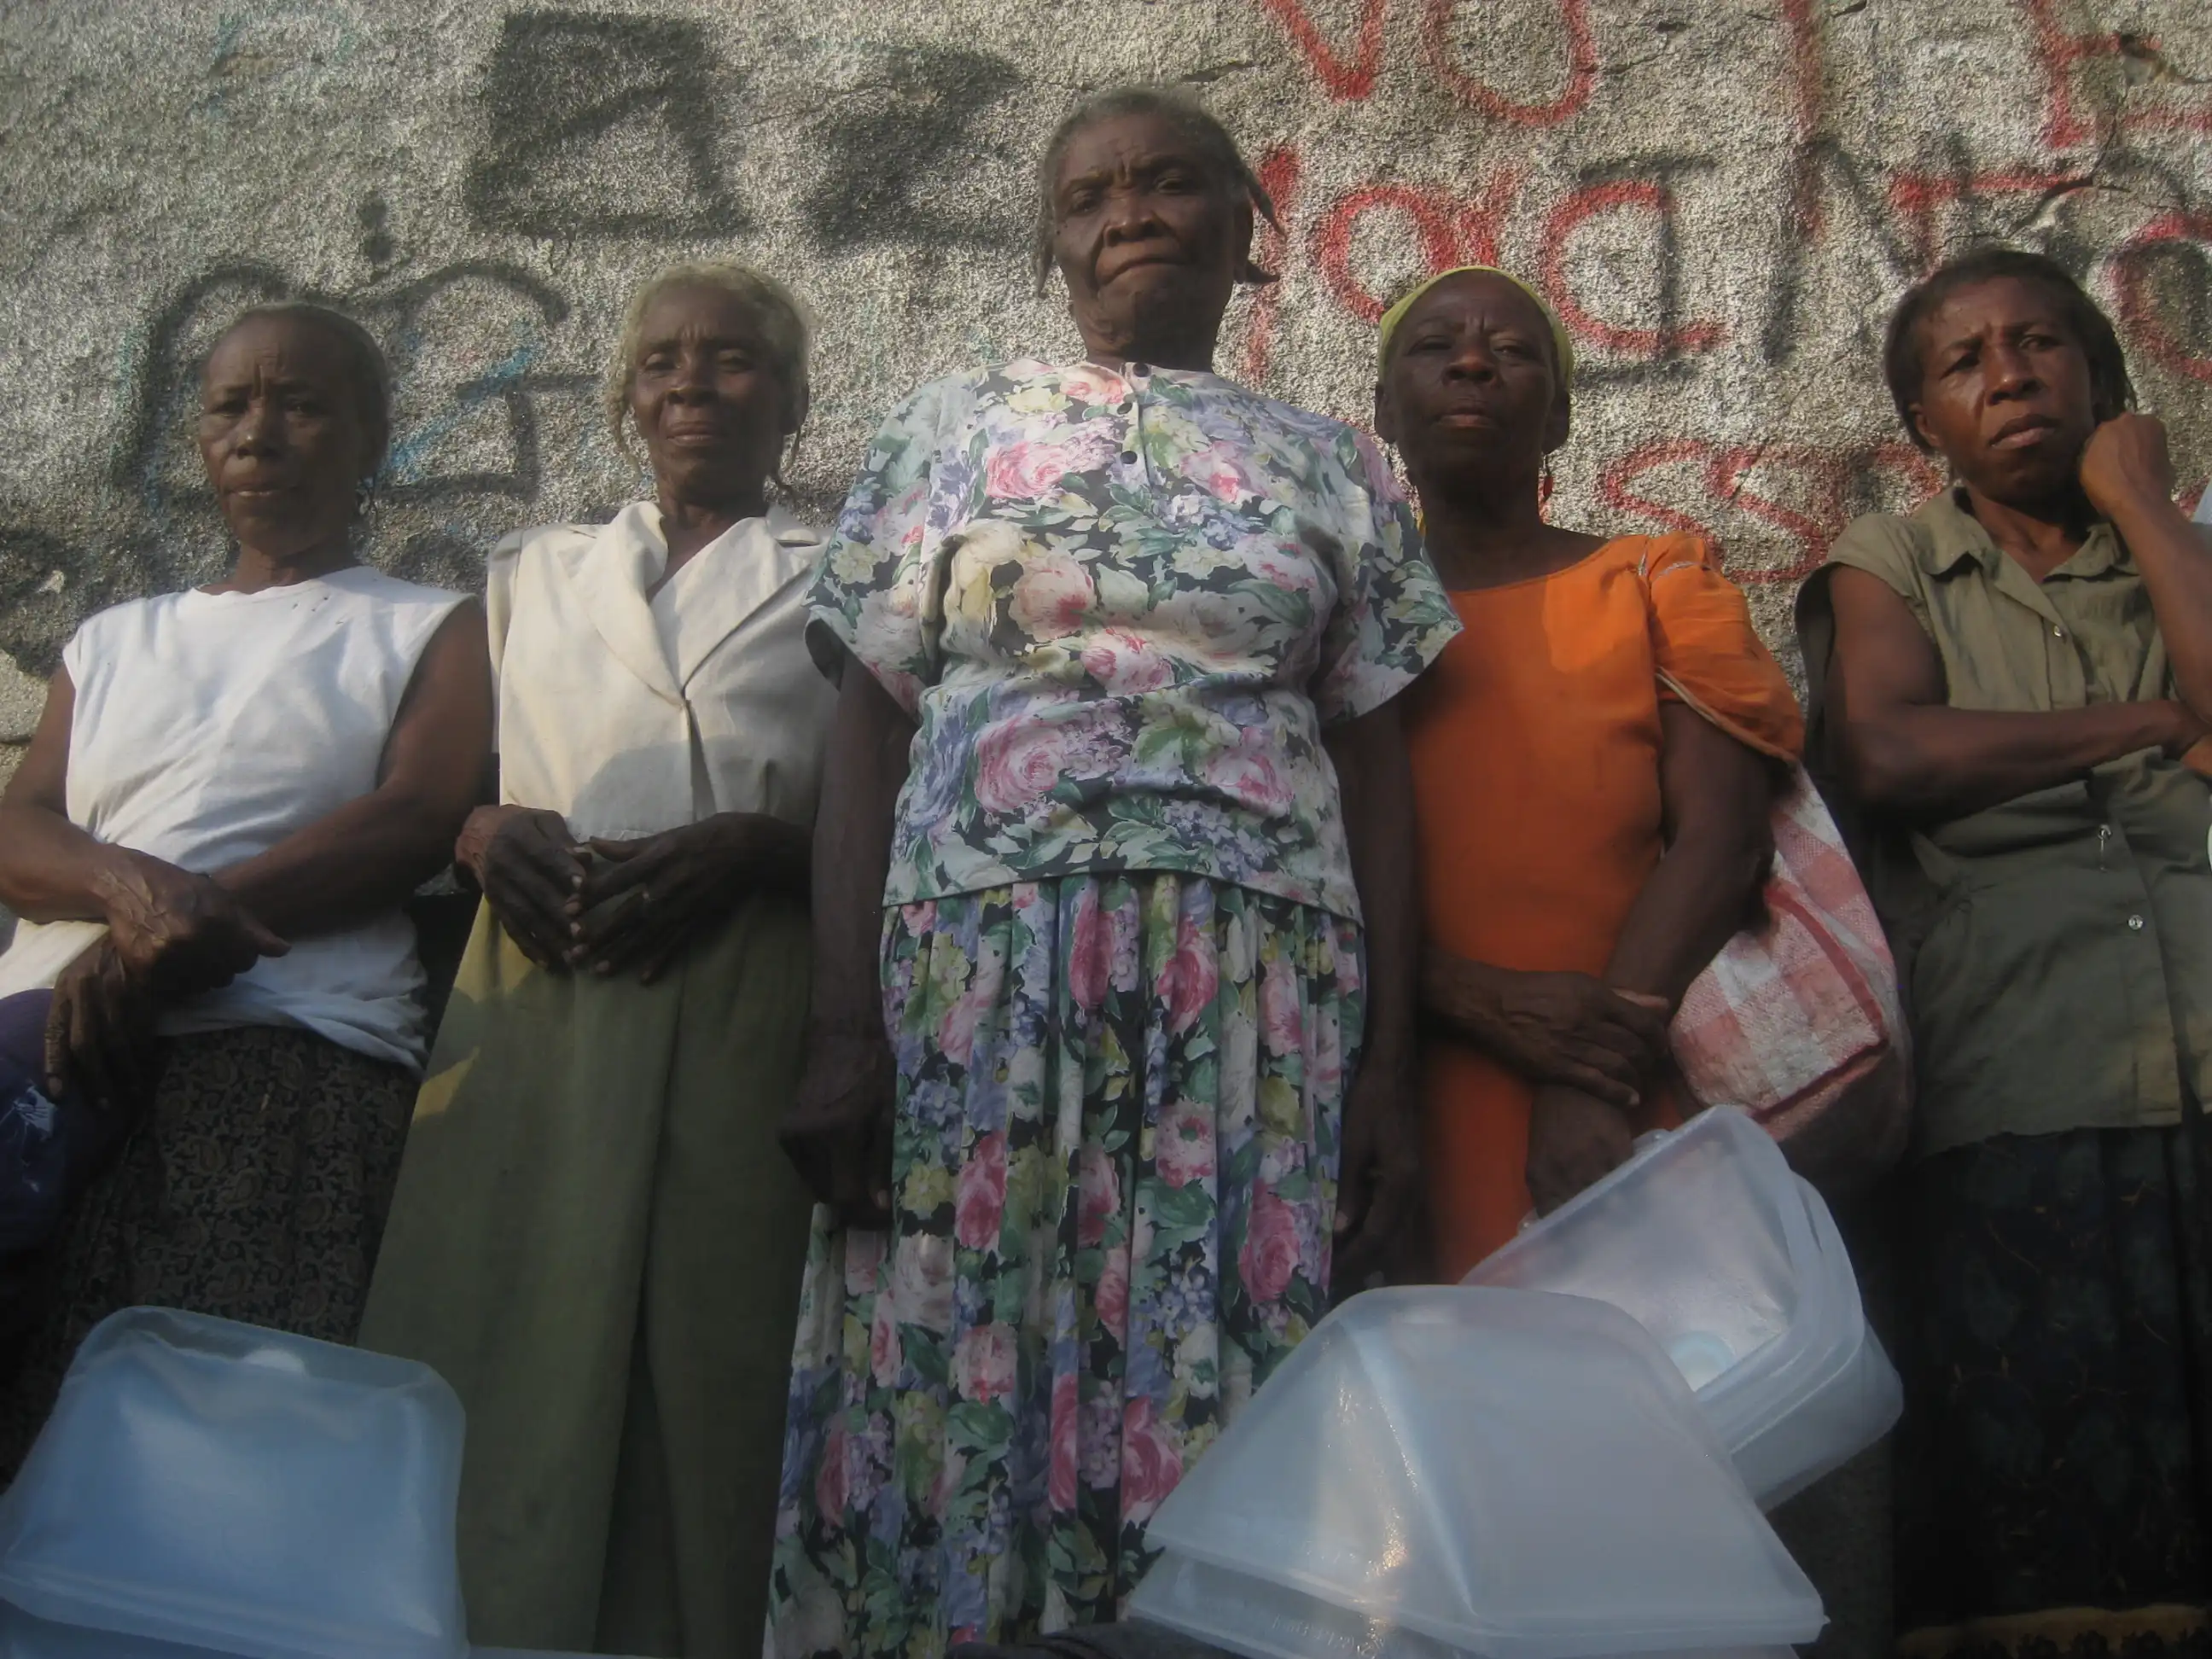 Women of Saint Martin, Port au Prince, Haiti